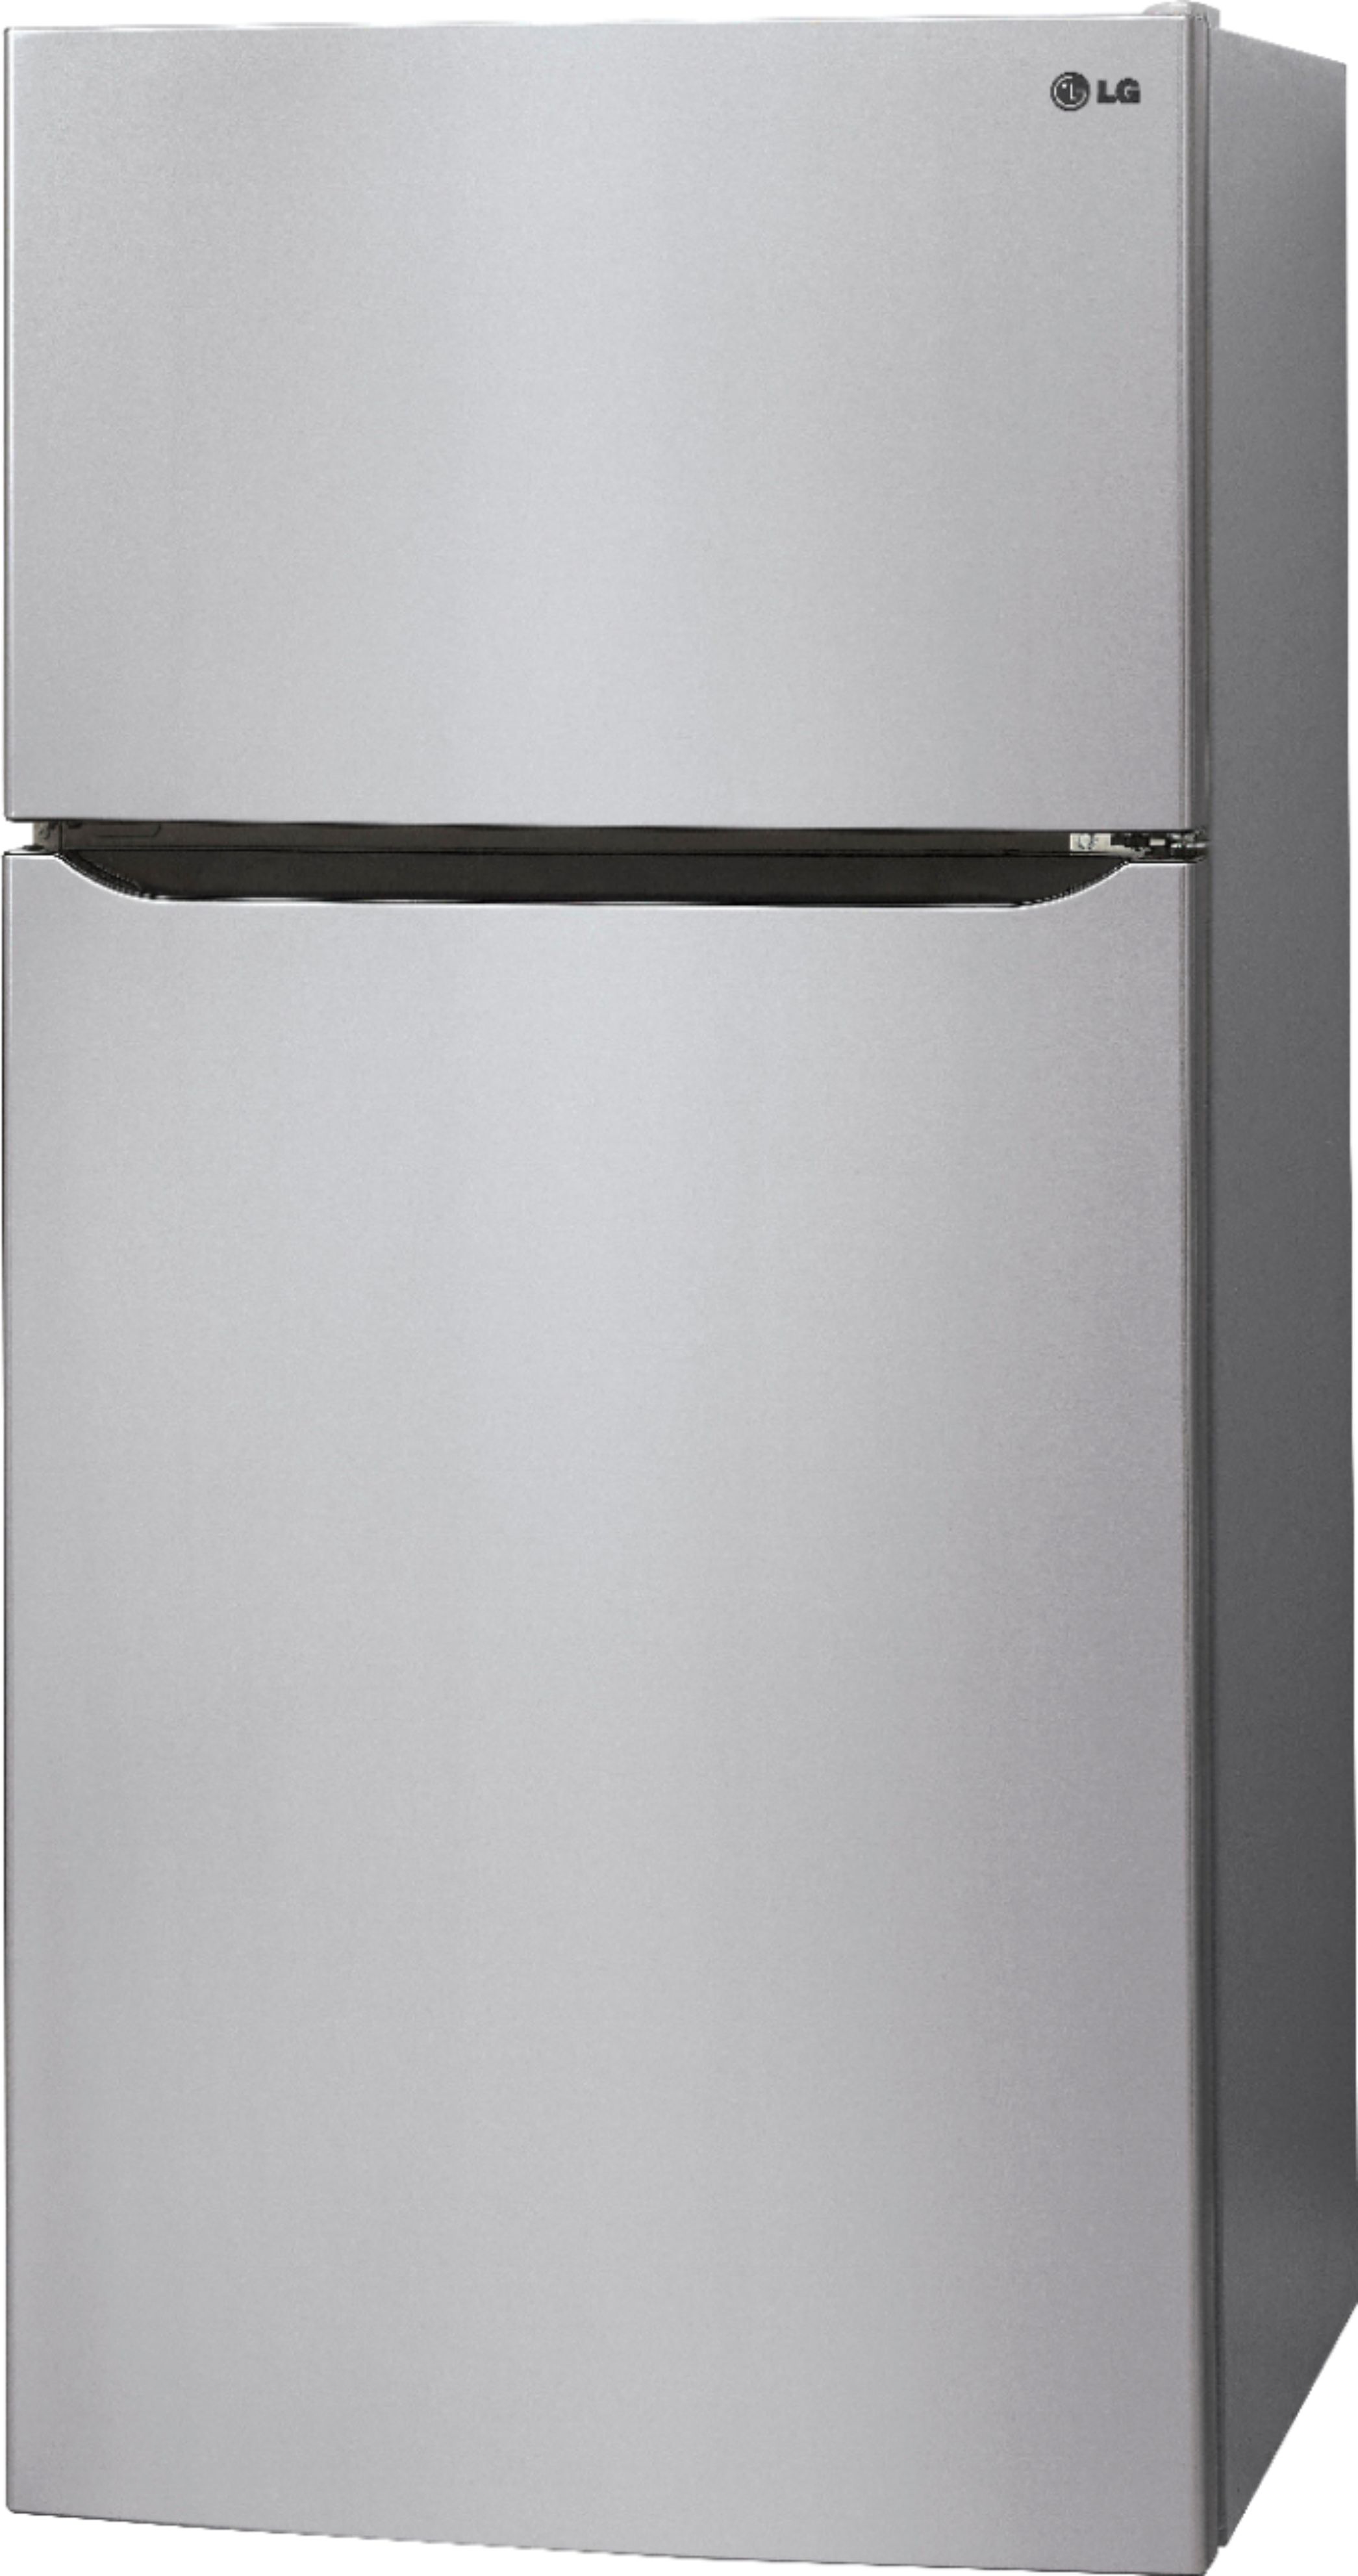 Left View: Amana - 22.1 Cu. Ft. Bottom-Freezer Refrigerator - Stainless steel